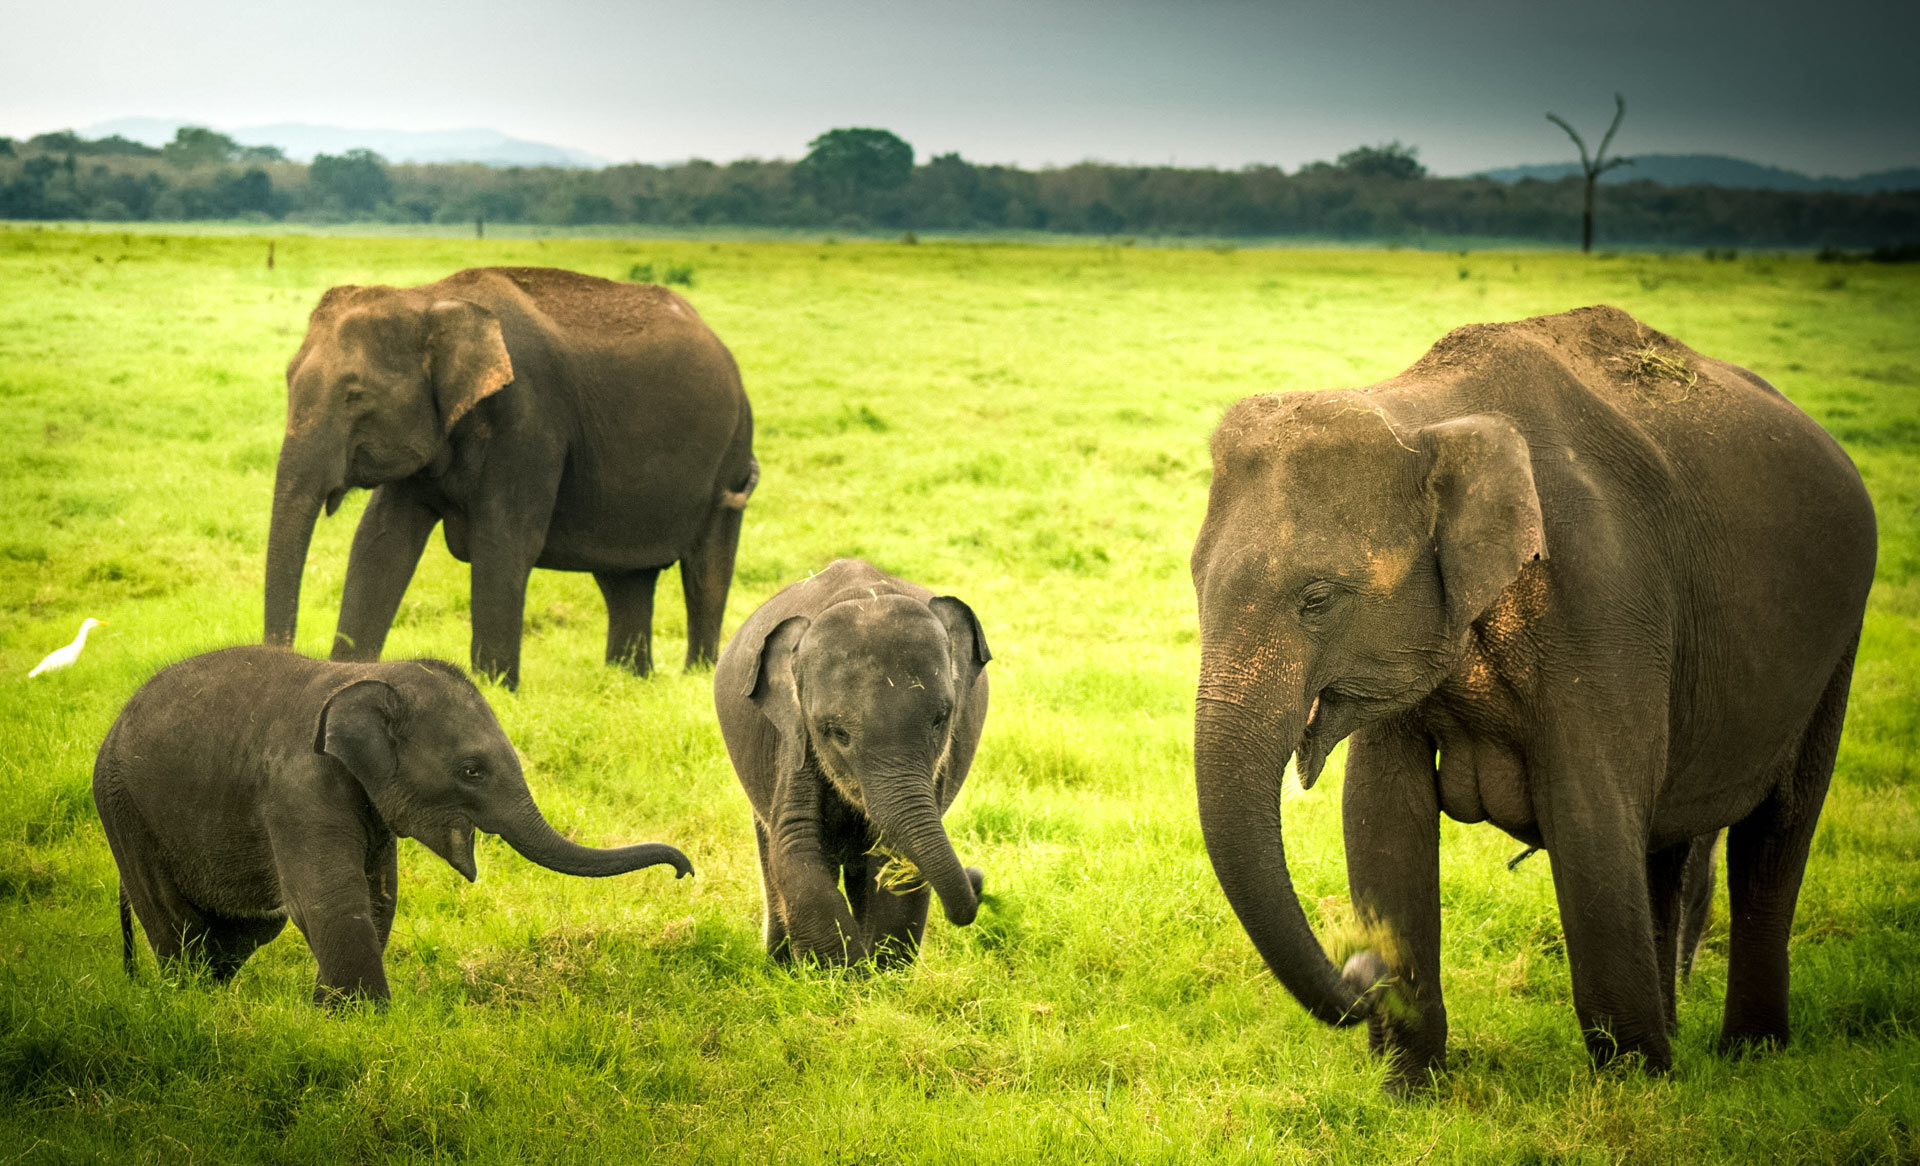 Elephants in Kaudulla - 10 days in Sri Lanka - Sri Lanka things to do